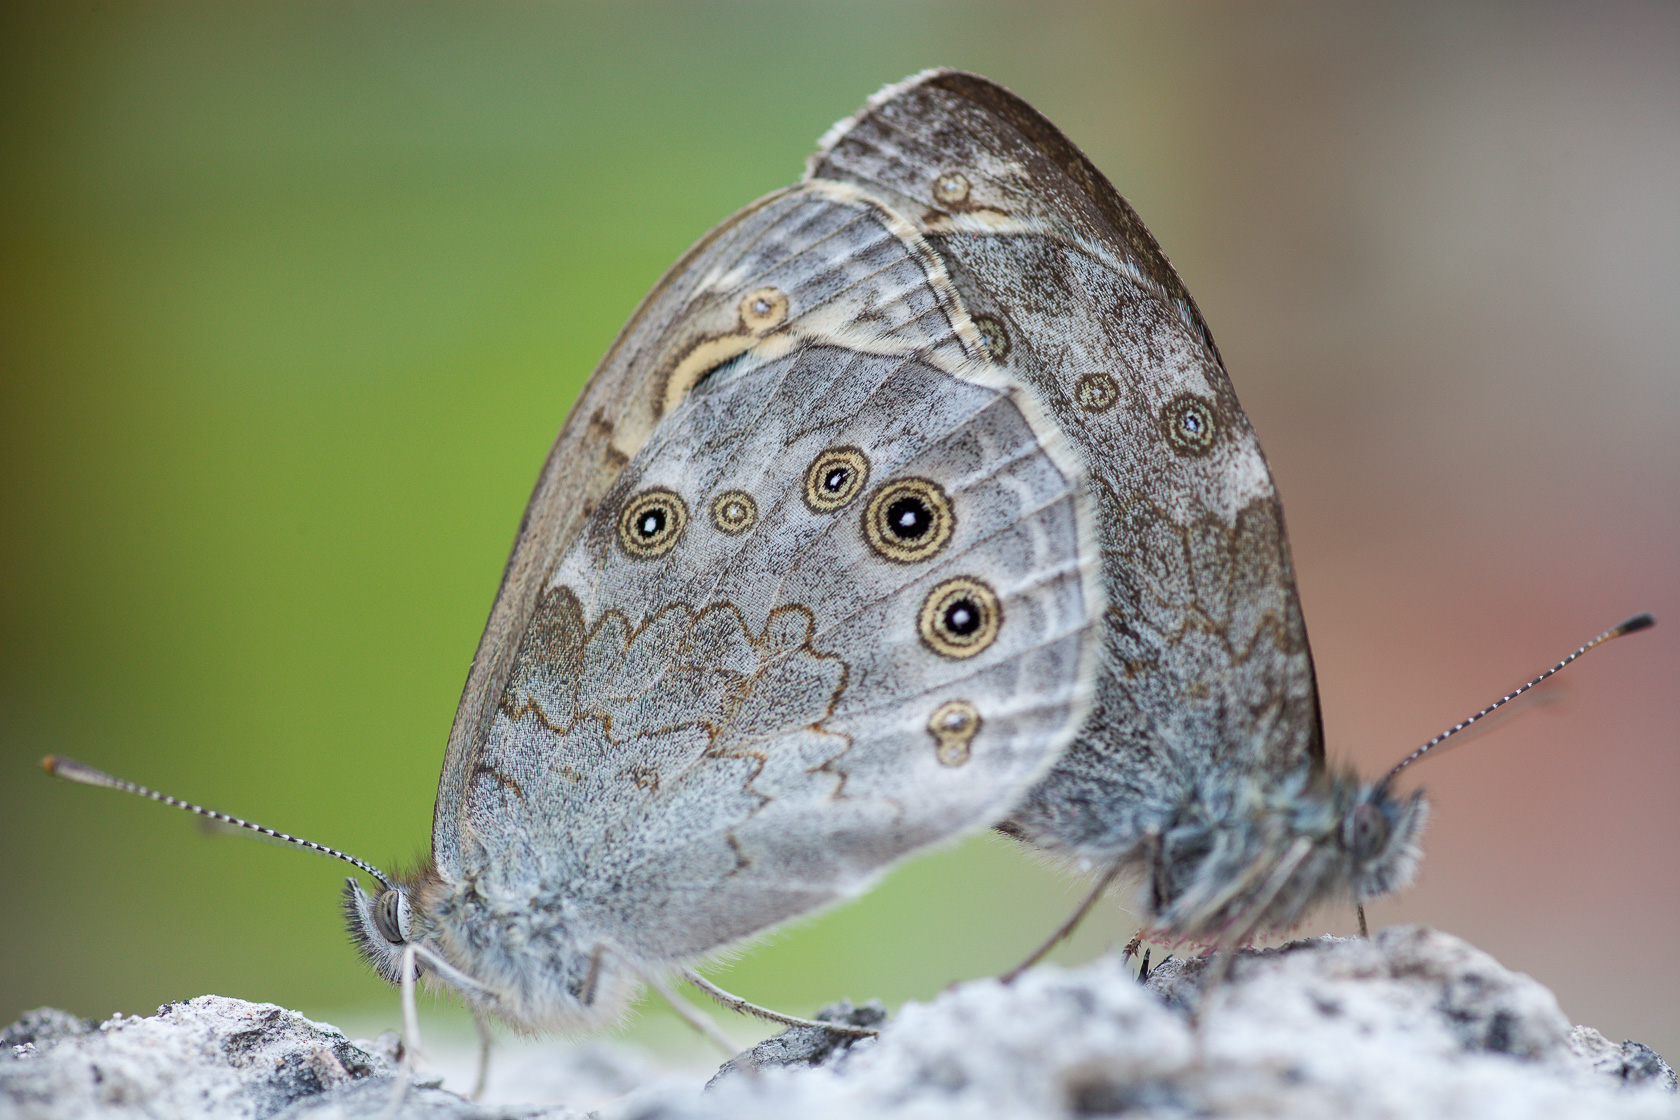 Couple de papillons Ariane (Lasiommata maera) en reproduction, durant un stage photo papillon